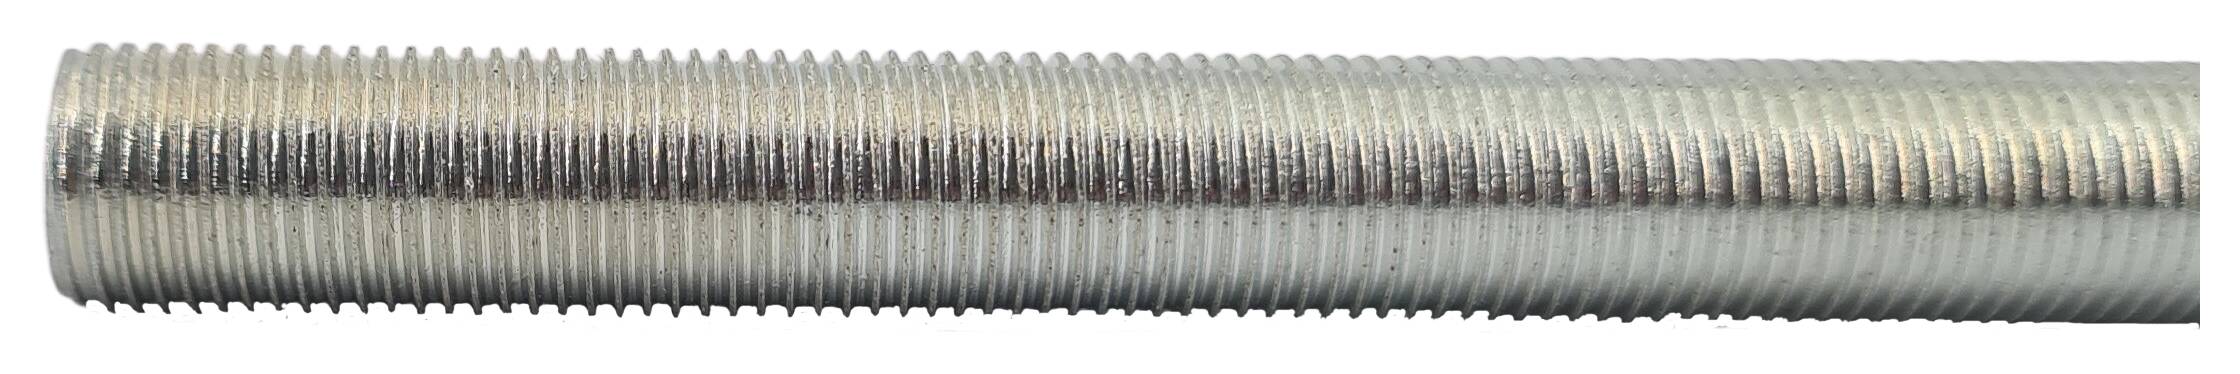 iron thread tube M10x1x210 round zinc